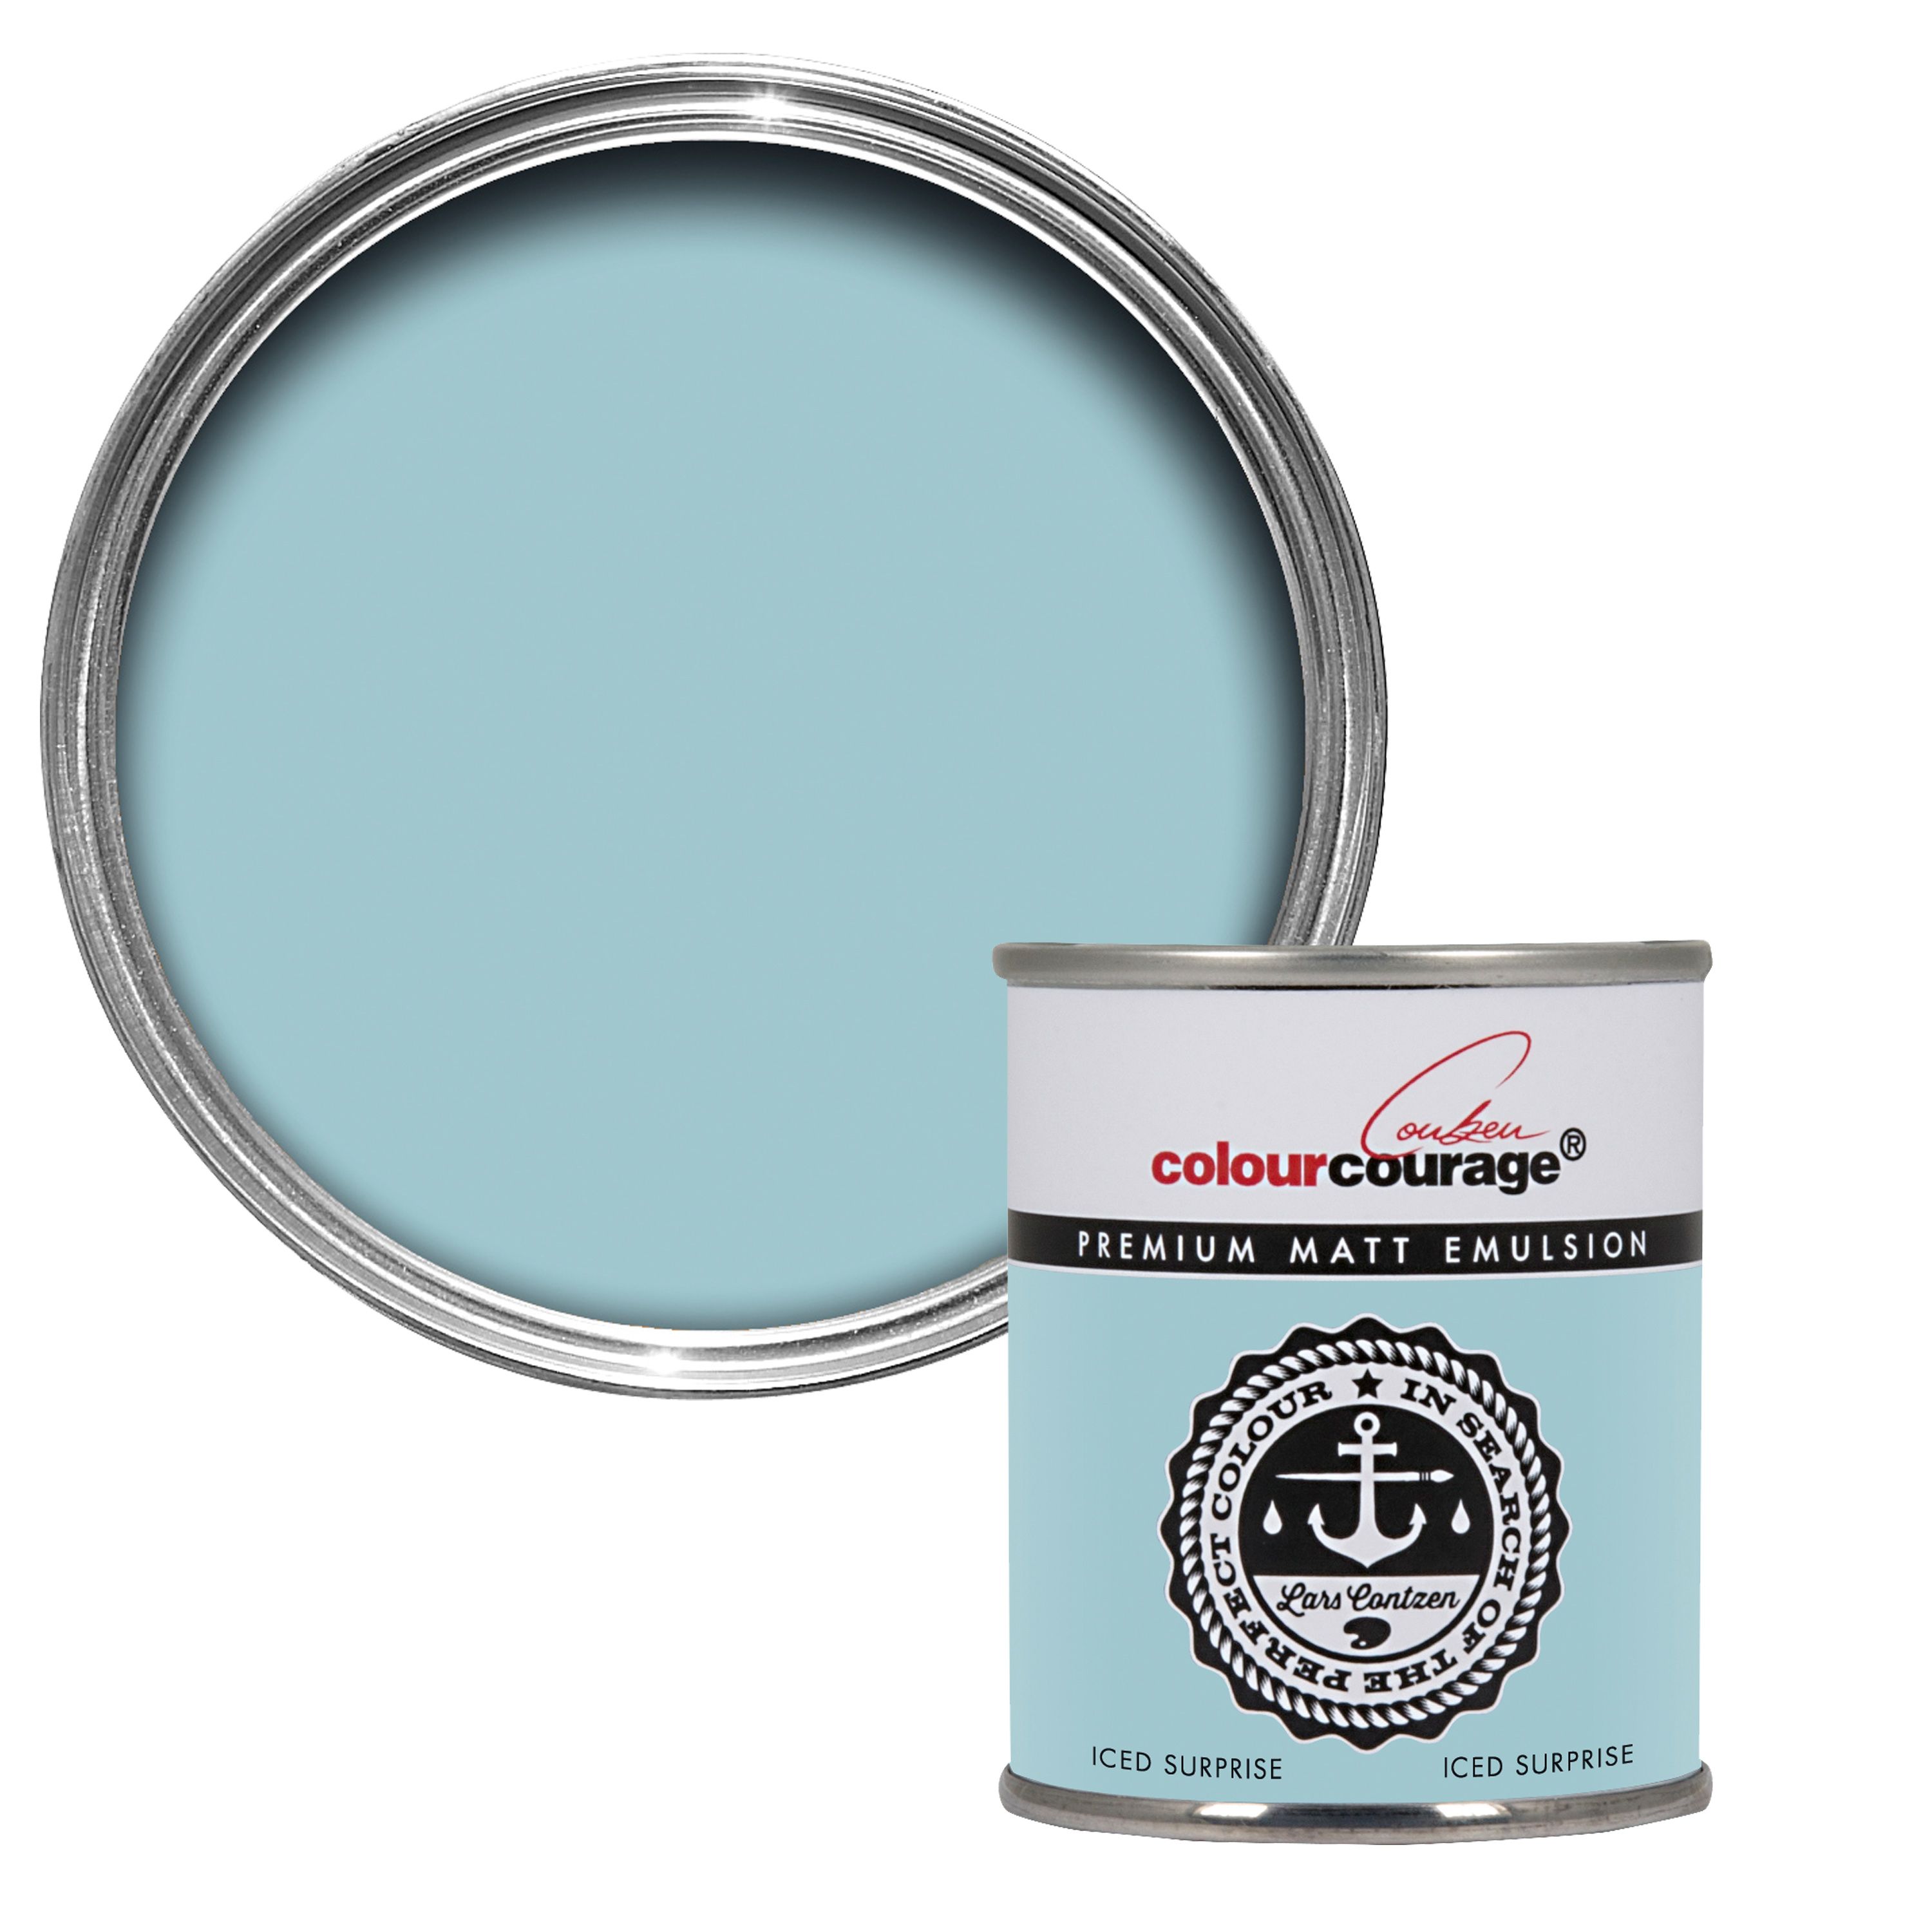 colourcourage Iced surprise Matt Emulsion paint 125ml Tester pot